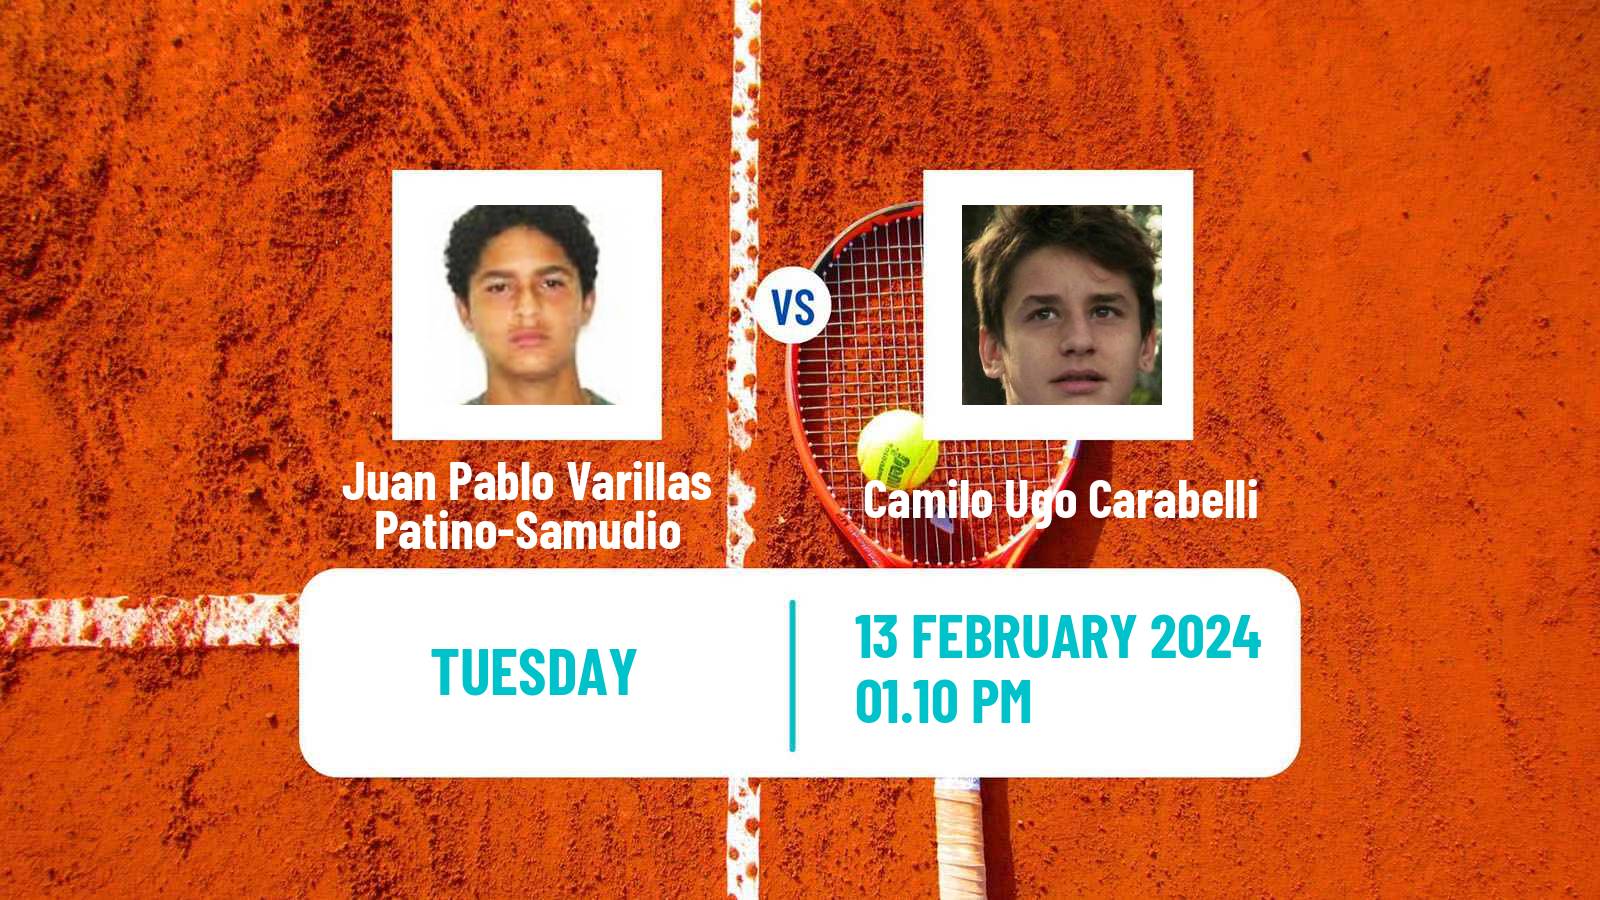 Tennis ATP Buenos Aires Juan Pablo Varillas Patino-Samudio - Camilo Ugo Carabelli